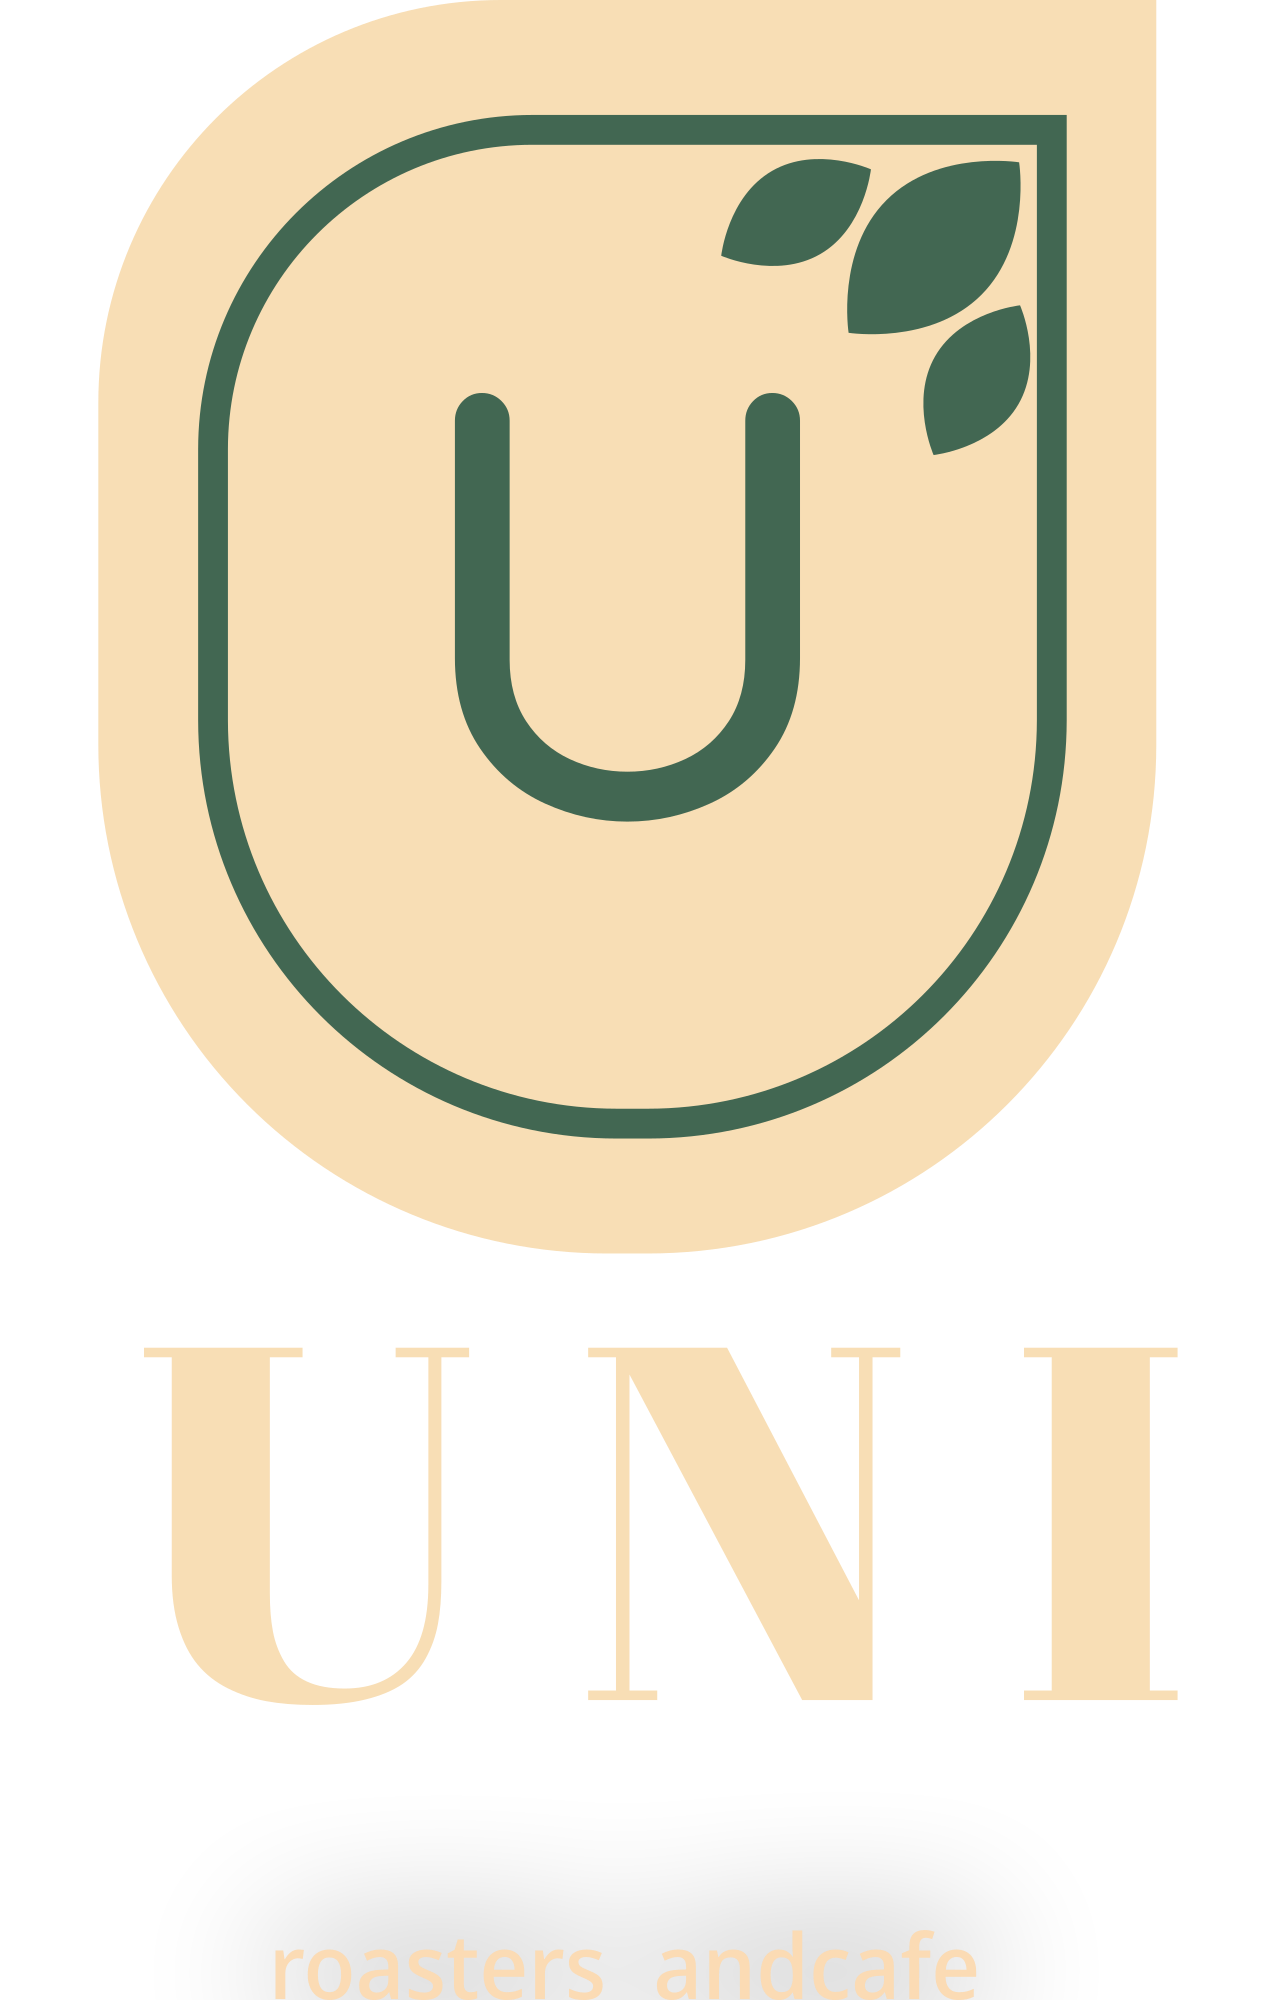 UNI's logo